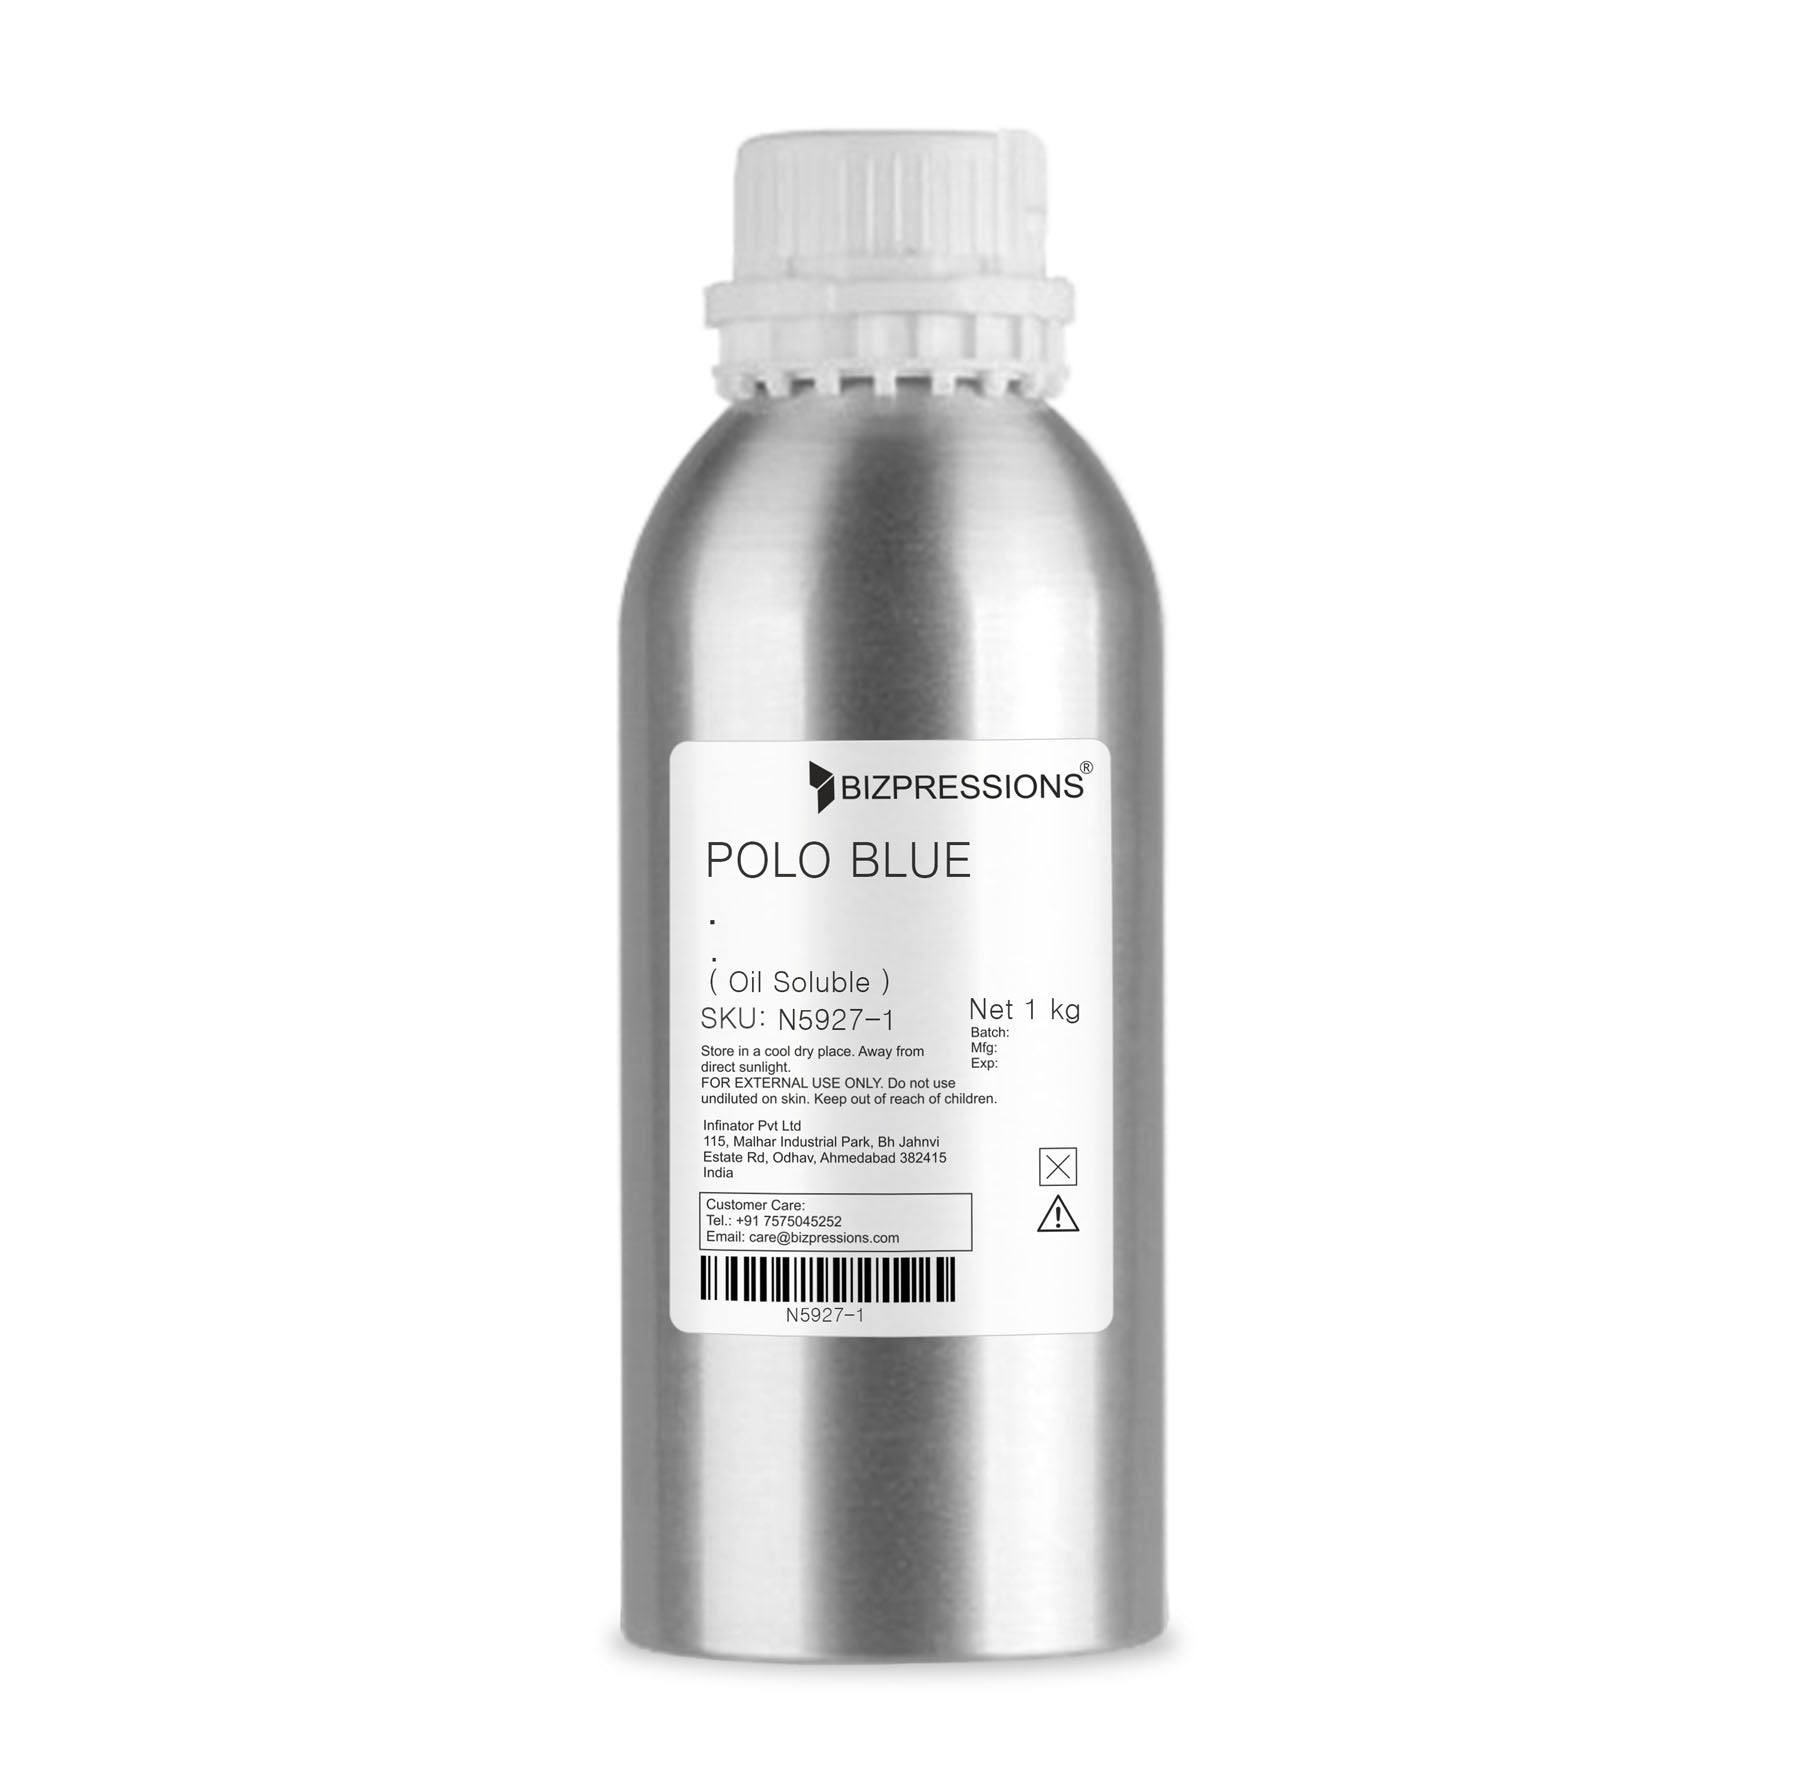 POLO BLUE - Fragrance ( Oil Soluble ) - 1 kg